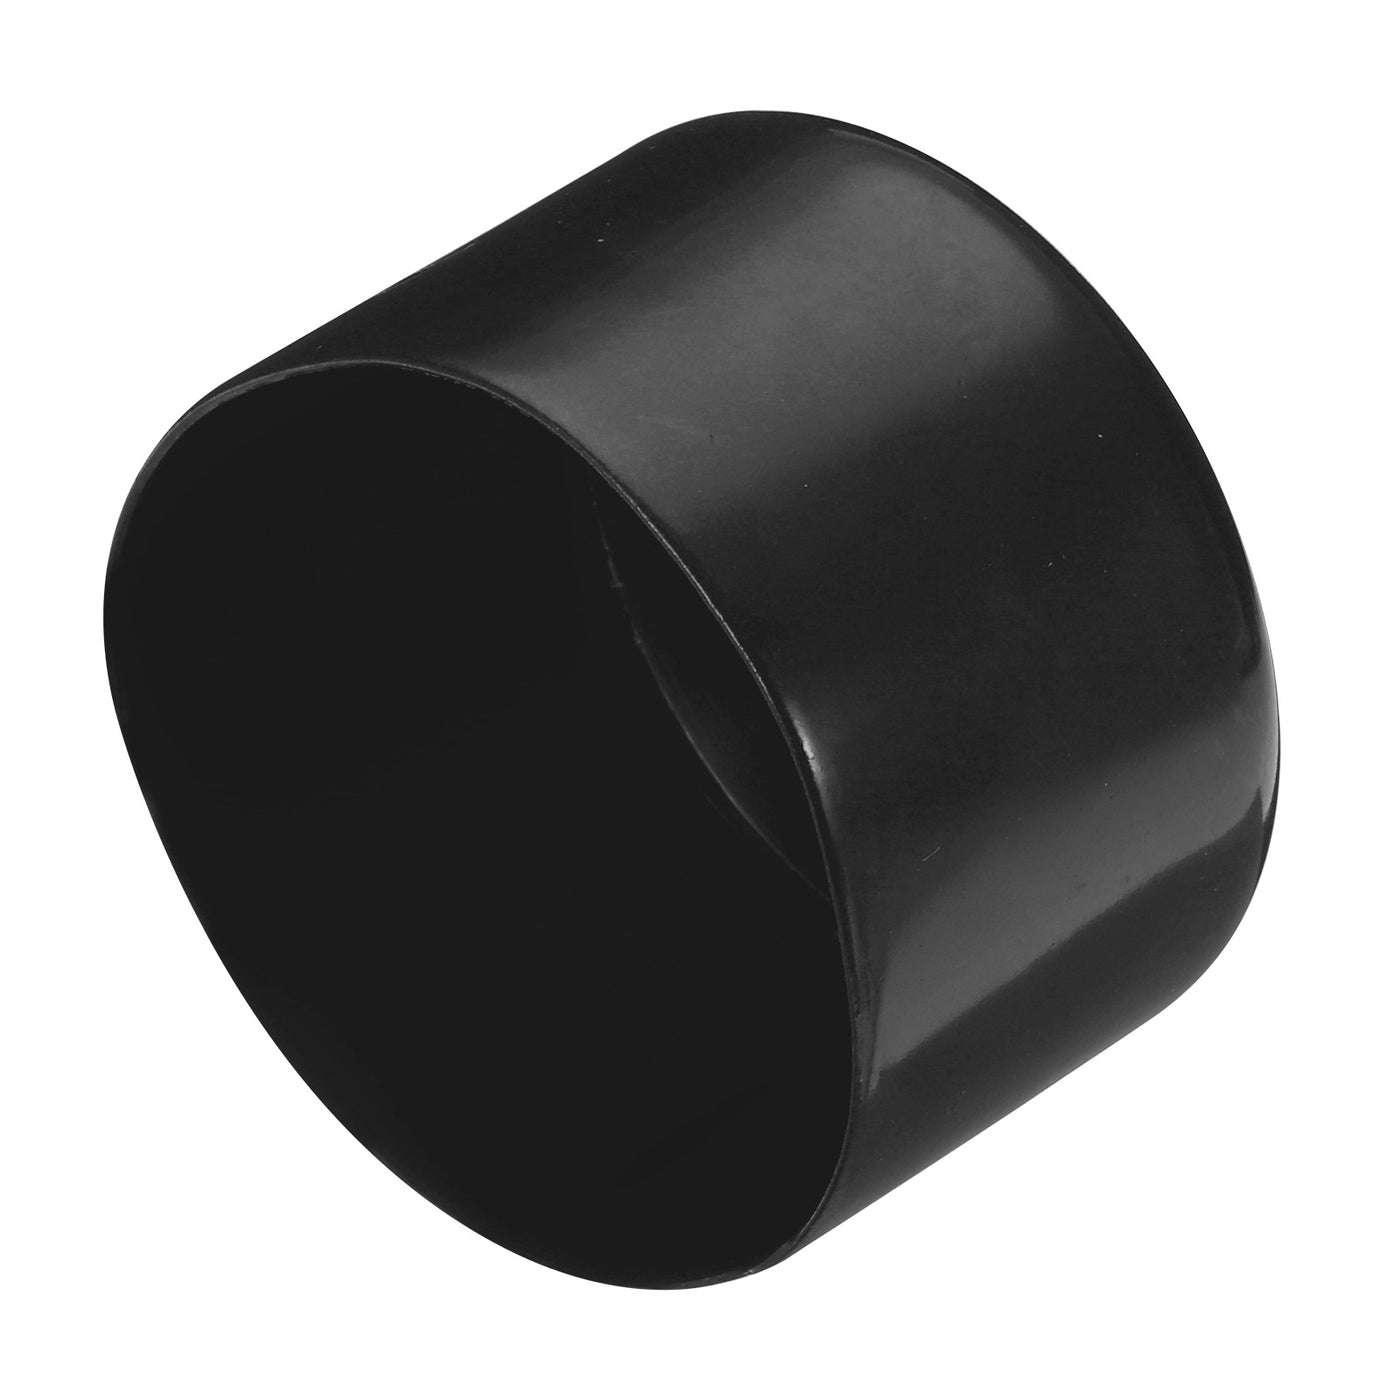 uxcell Uxcell 2pcs Rubber End Caps 100mm ID Vinyl Round Tube Bolt Cap Cover Screw Thread Protectors Black